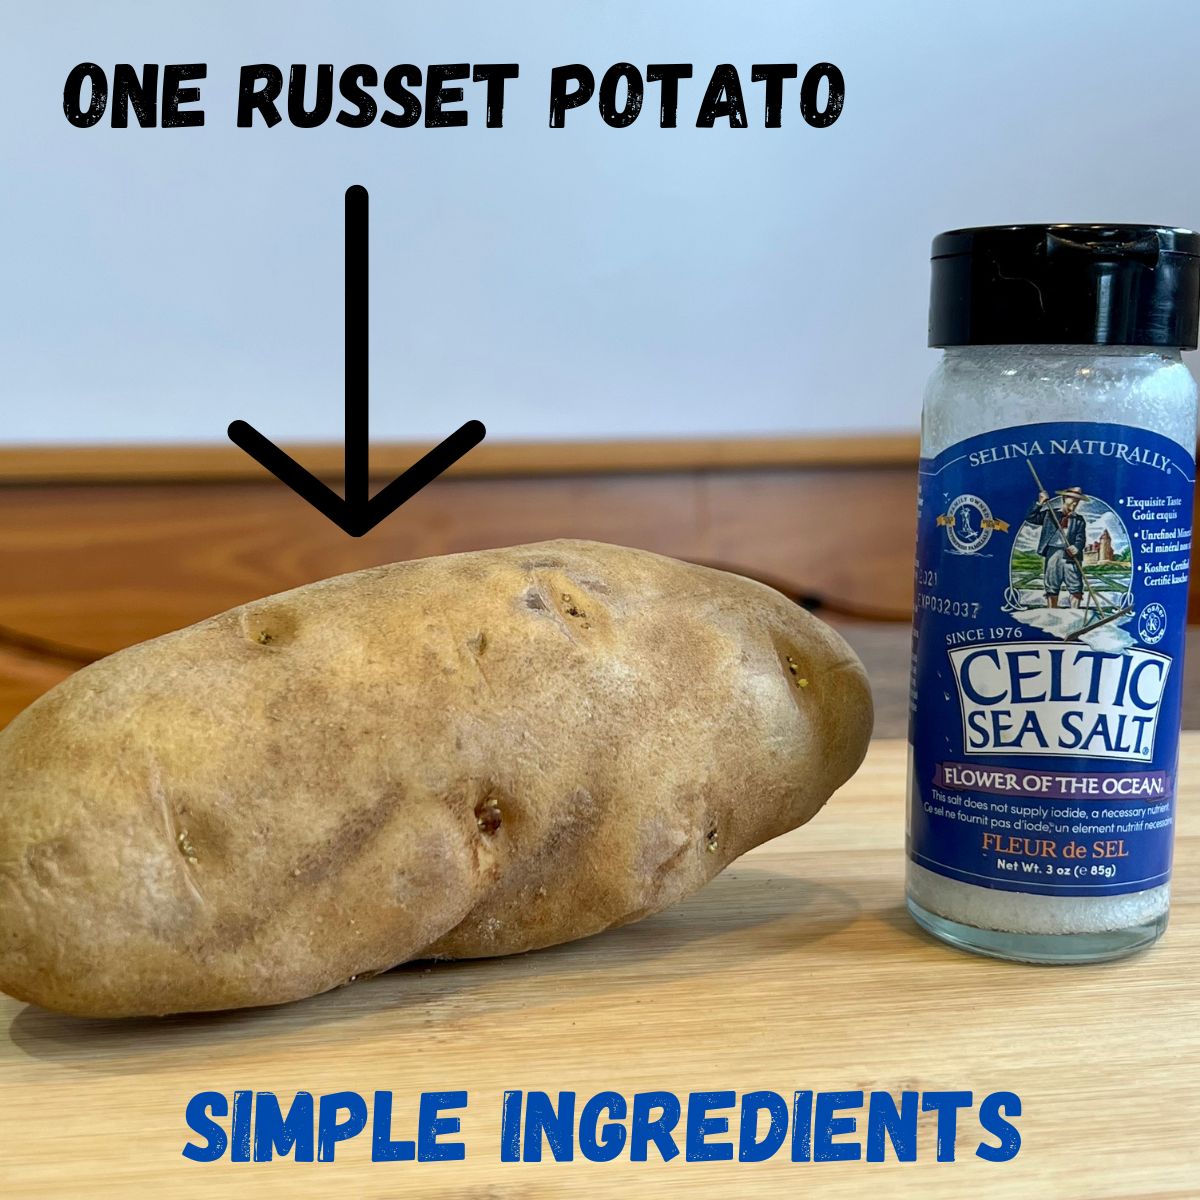 A Russet potato and a jar of Celtic Sea Salt